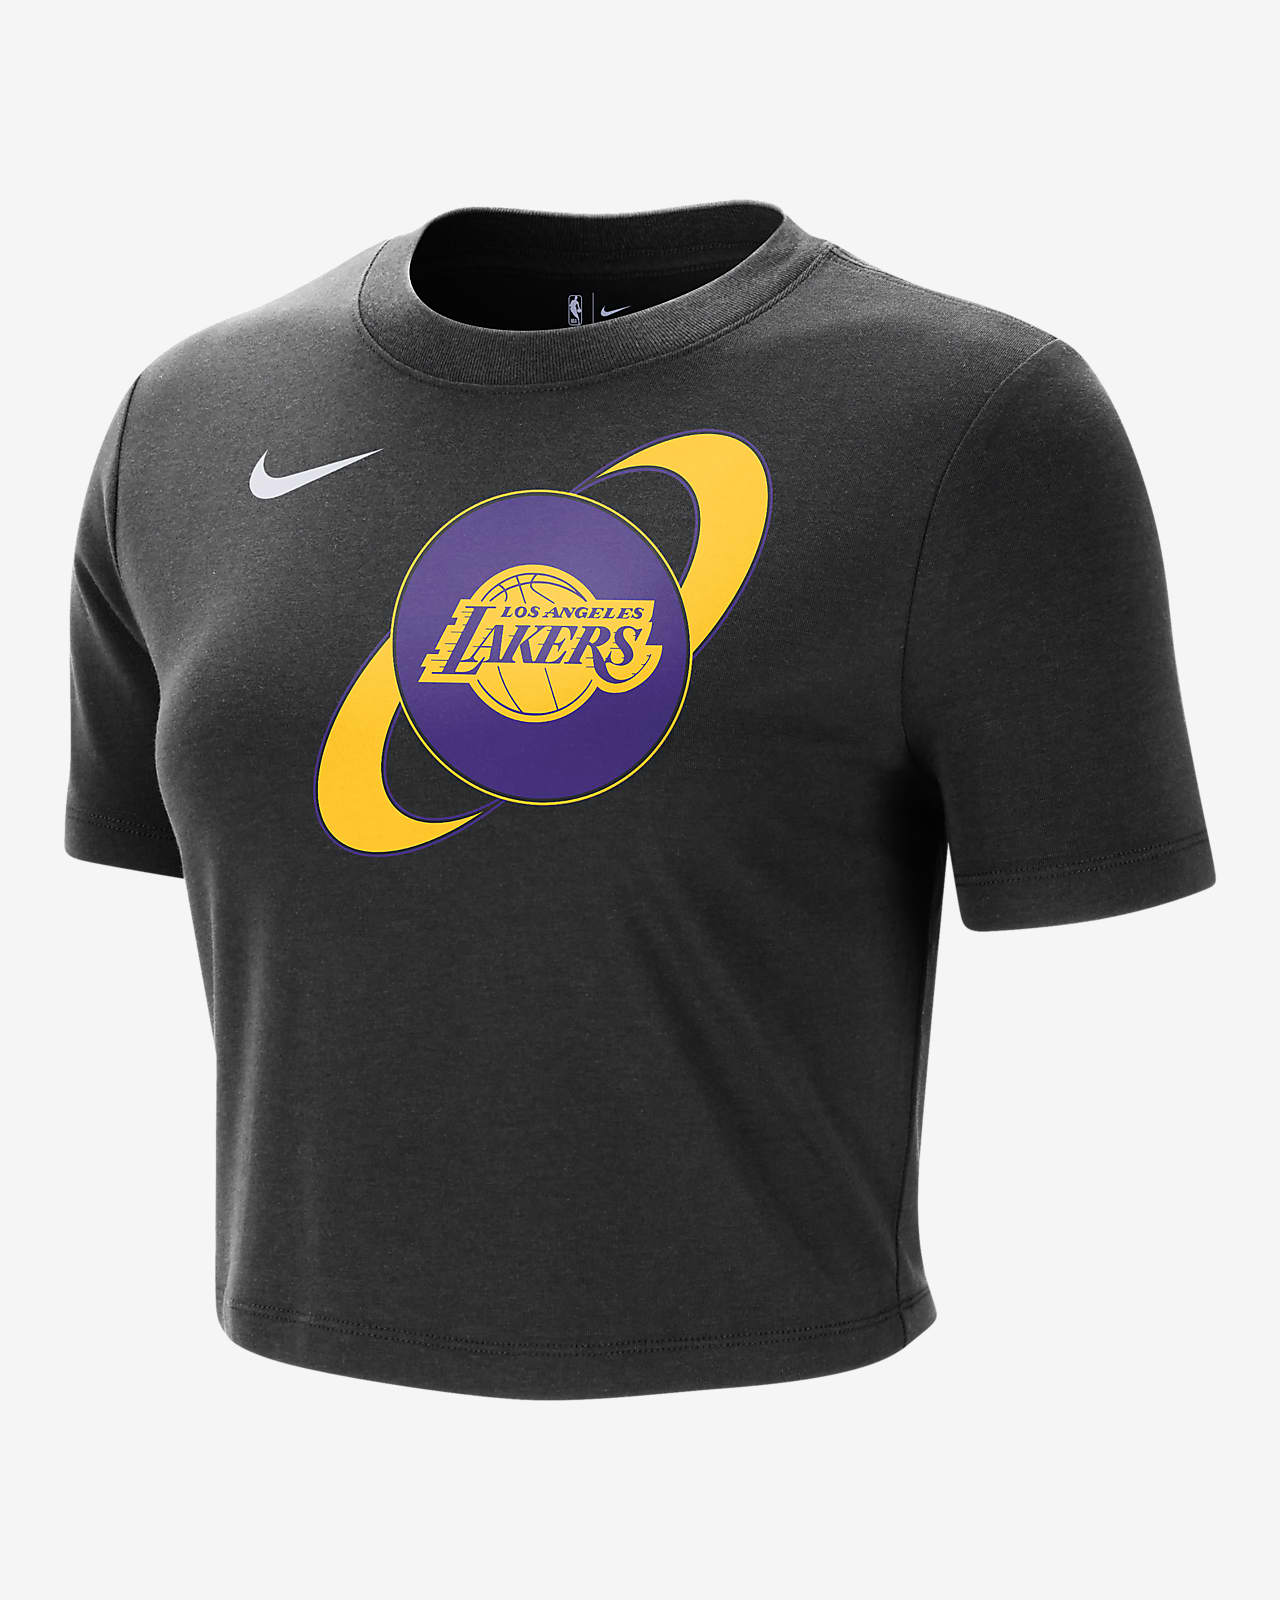 Playera Nike de la NBA slim y cropped para mujer Los Angeles Lakers Courtside